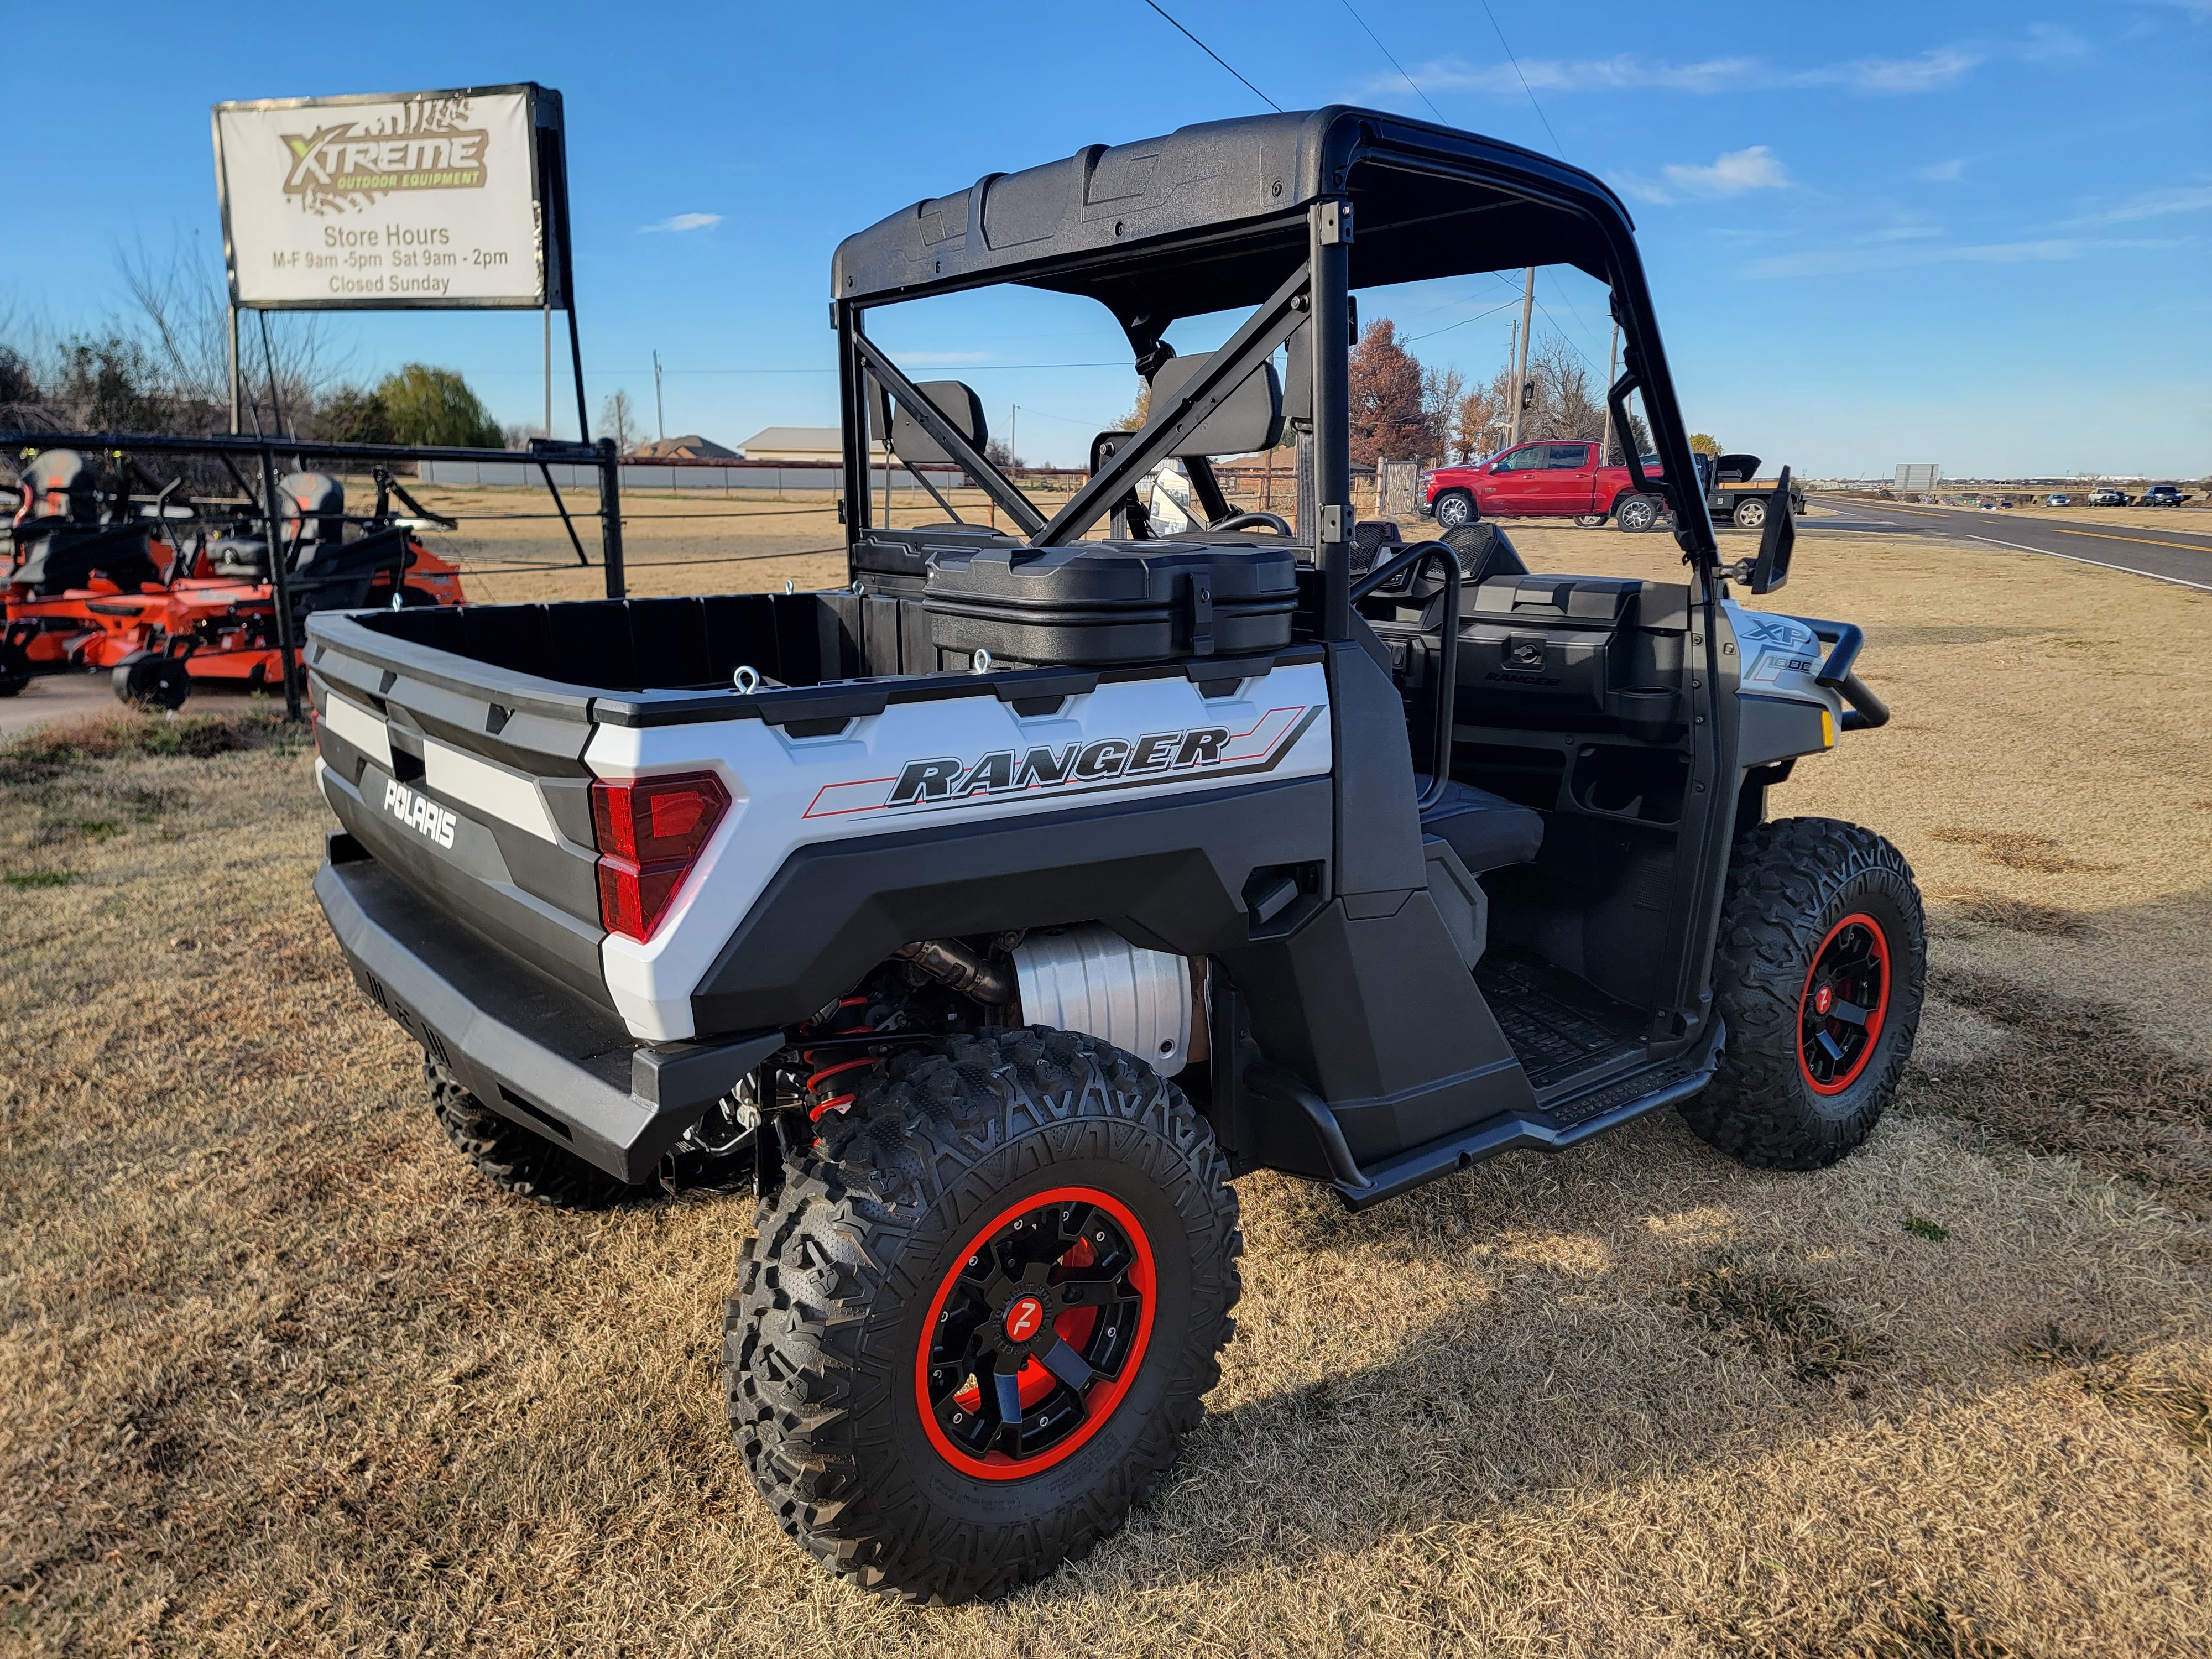 2021 Polaris Ranger XP 1000 Trail Boss Base at Xtreme Outdoor Equipment